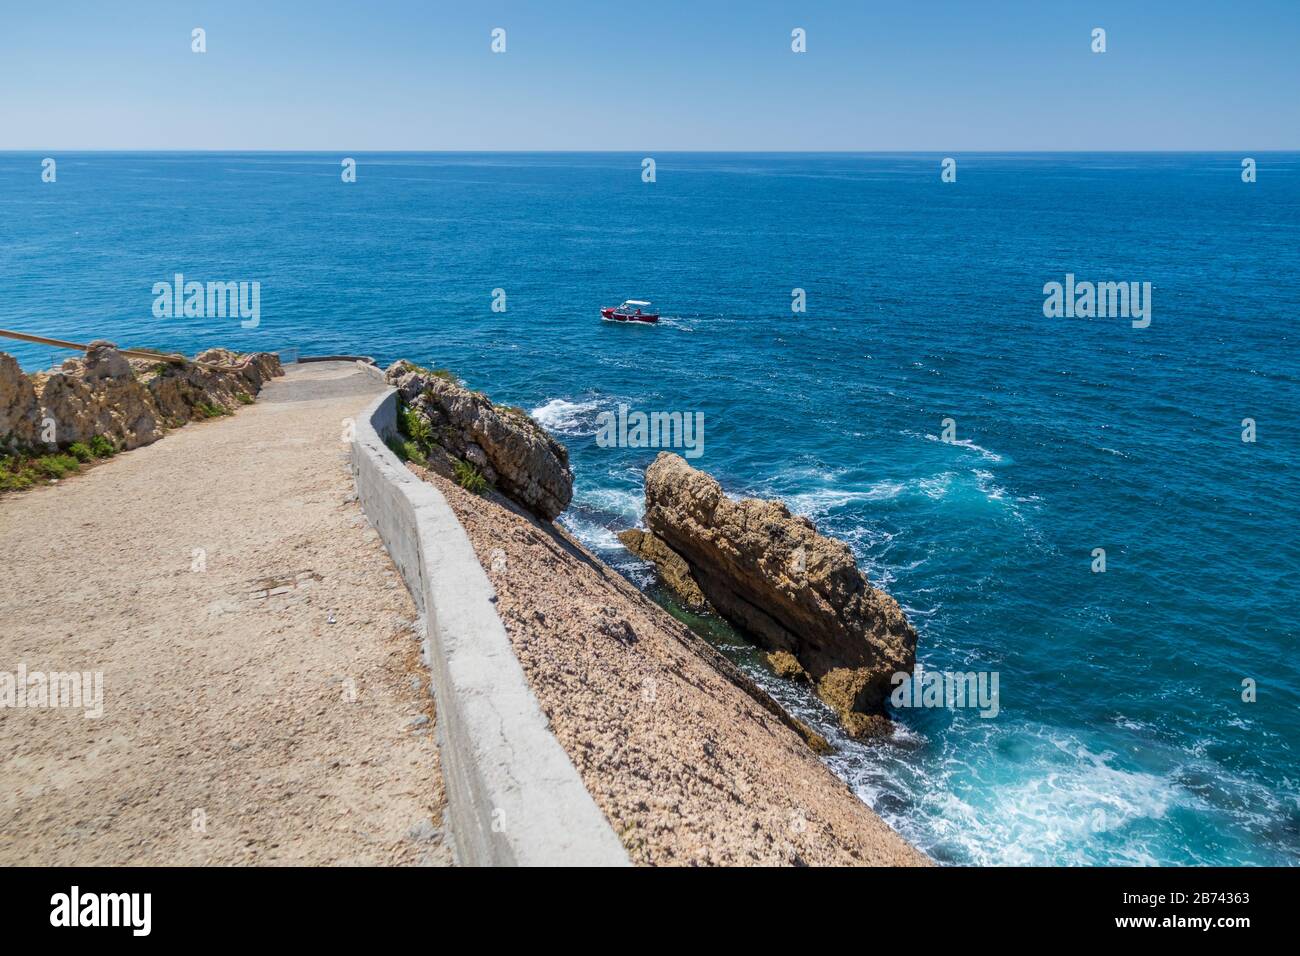 concrete cliff edge overlooking blue Adriatic Sea Stock Photo